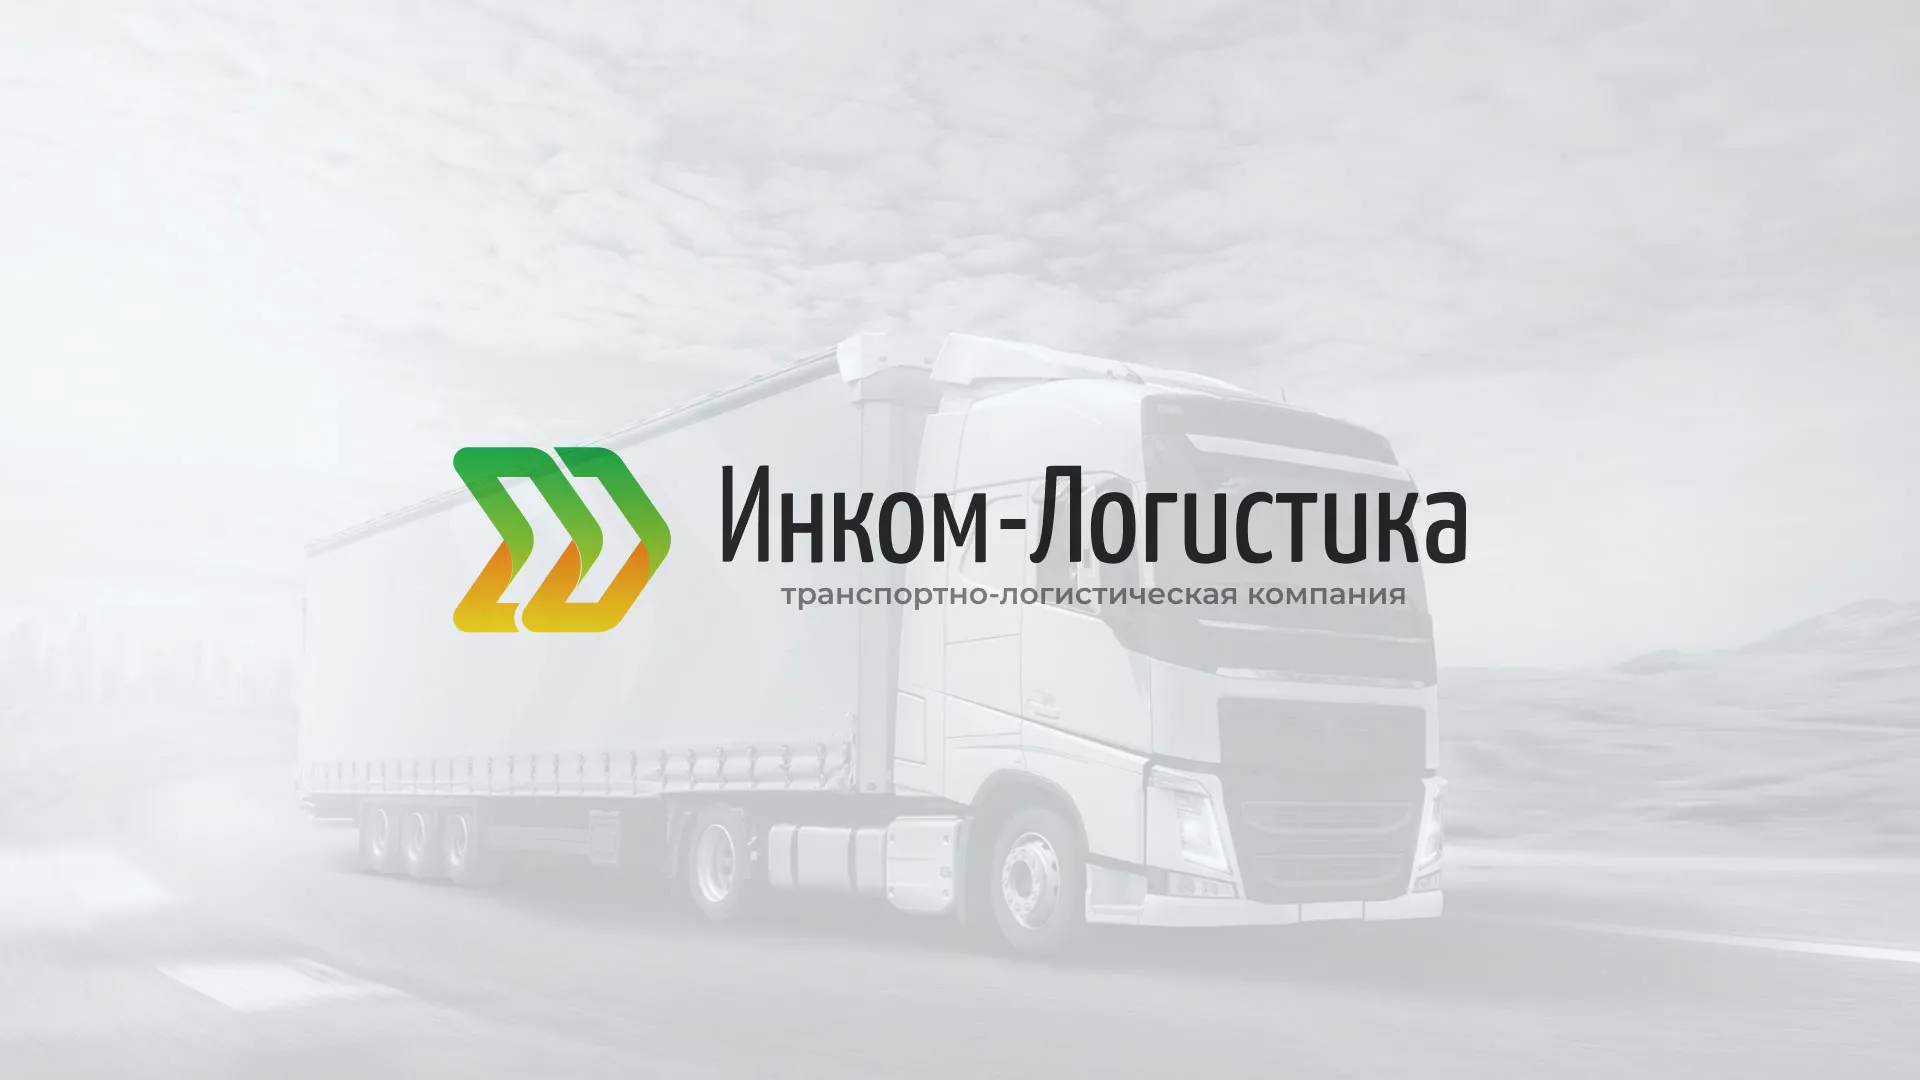 Разработка логотипа и сайта компании «Инком-Логистика» в Солнечногорске